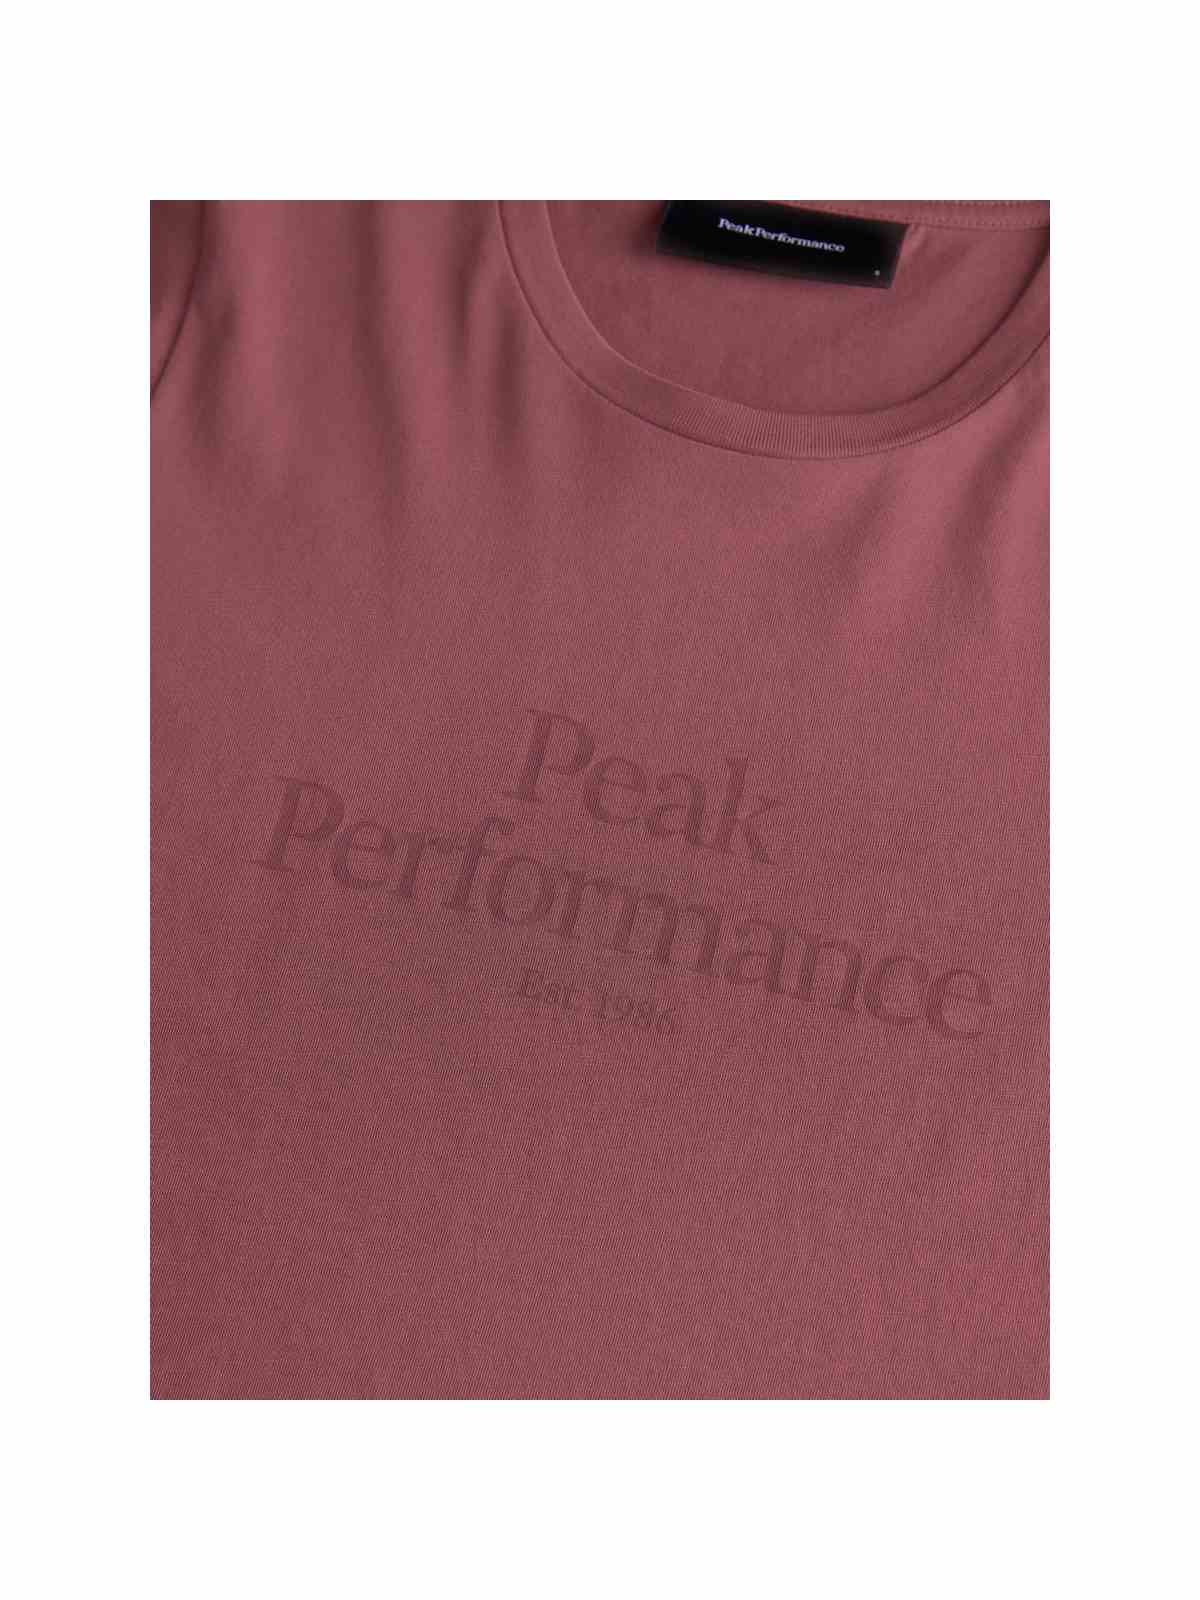 T Shirt Peak Performance W Original Tee - brązowy